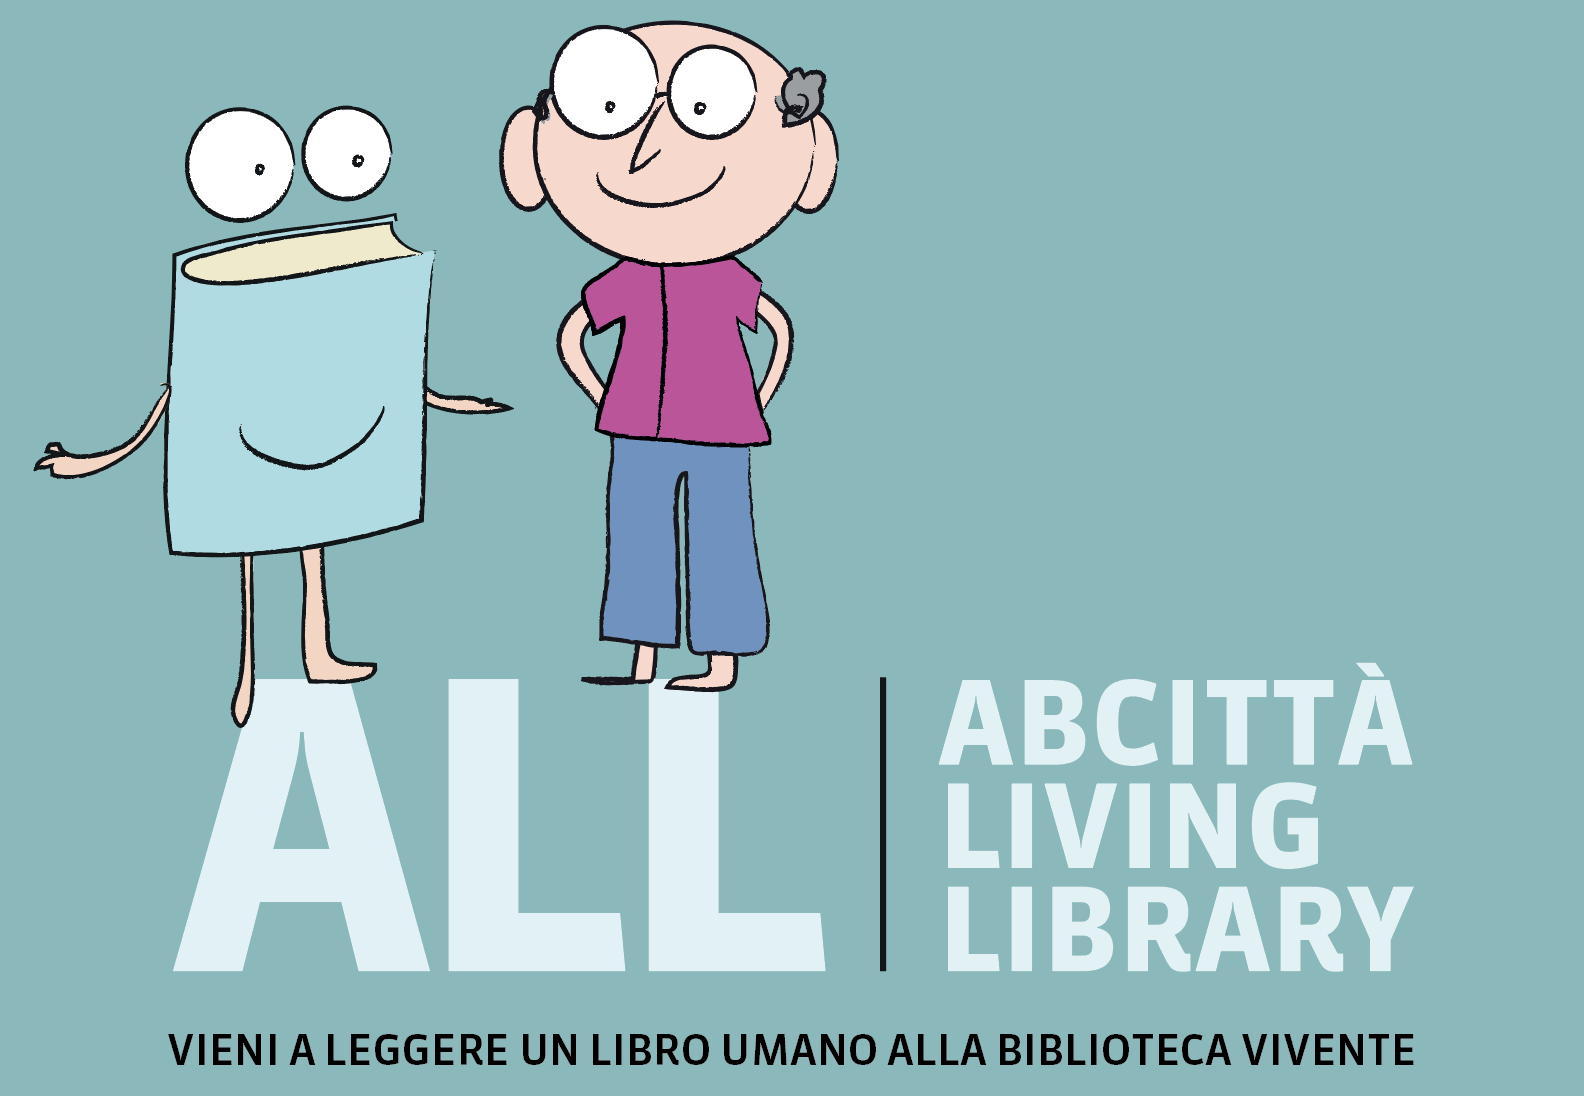 Biblioteca Vivente